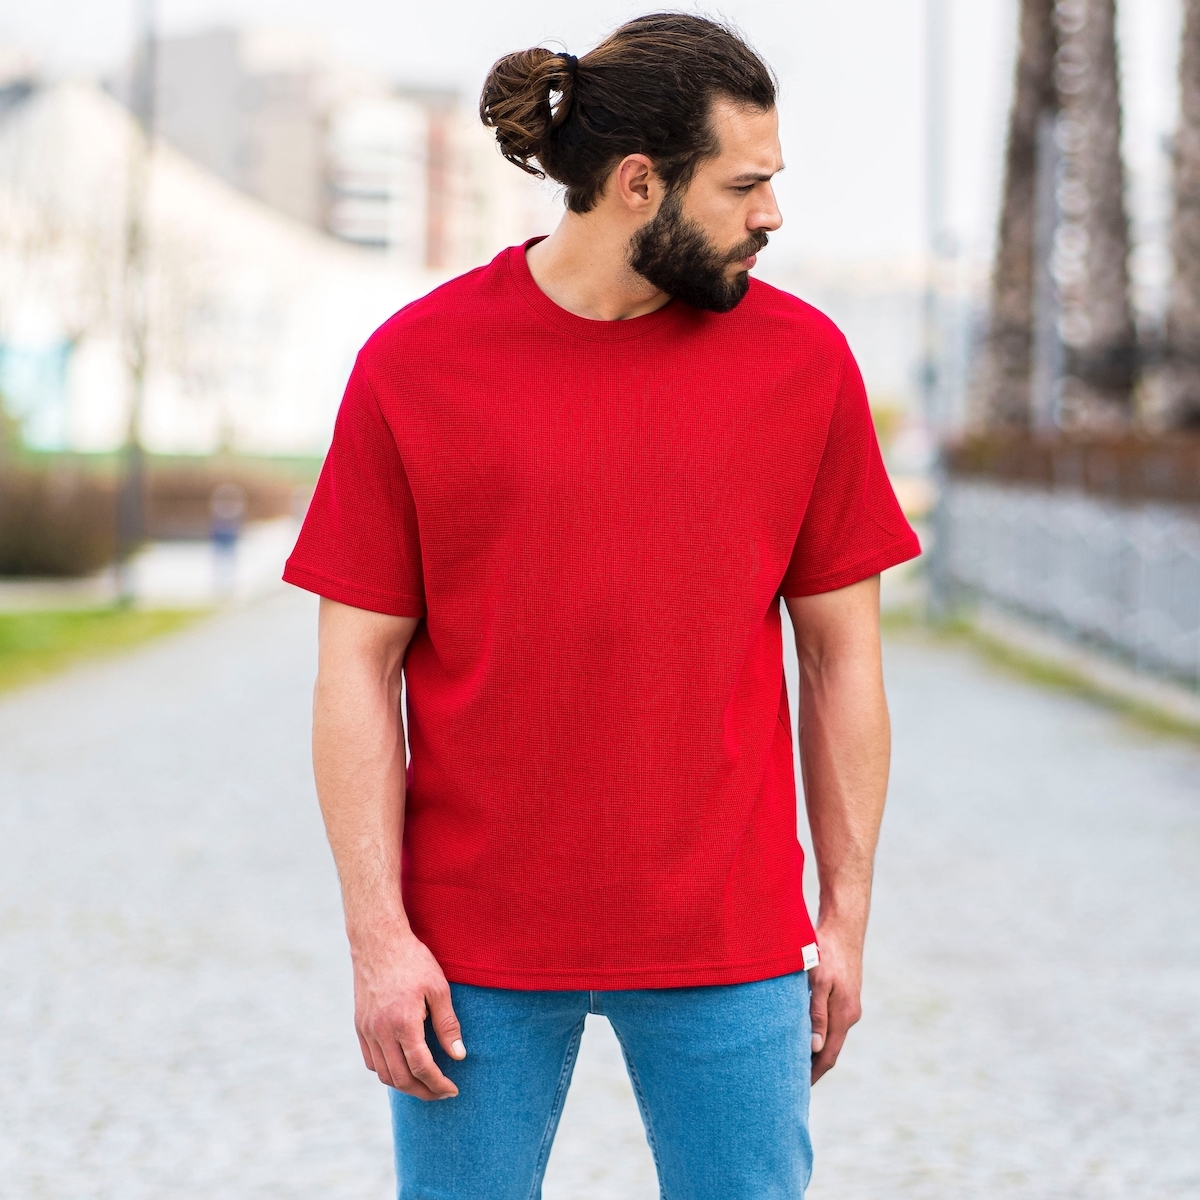 shirt for men red